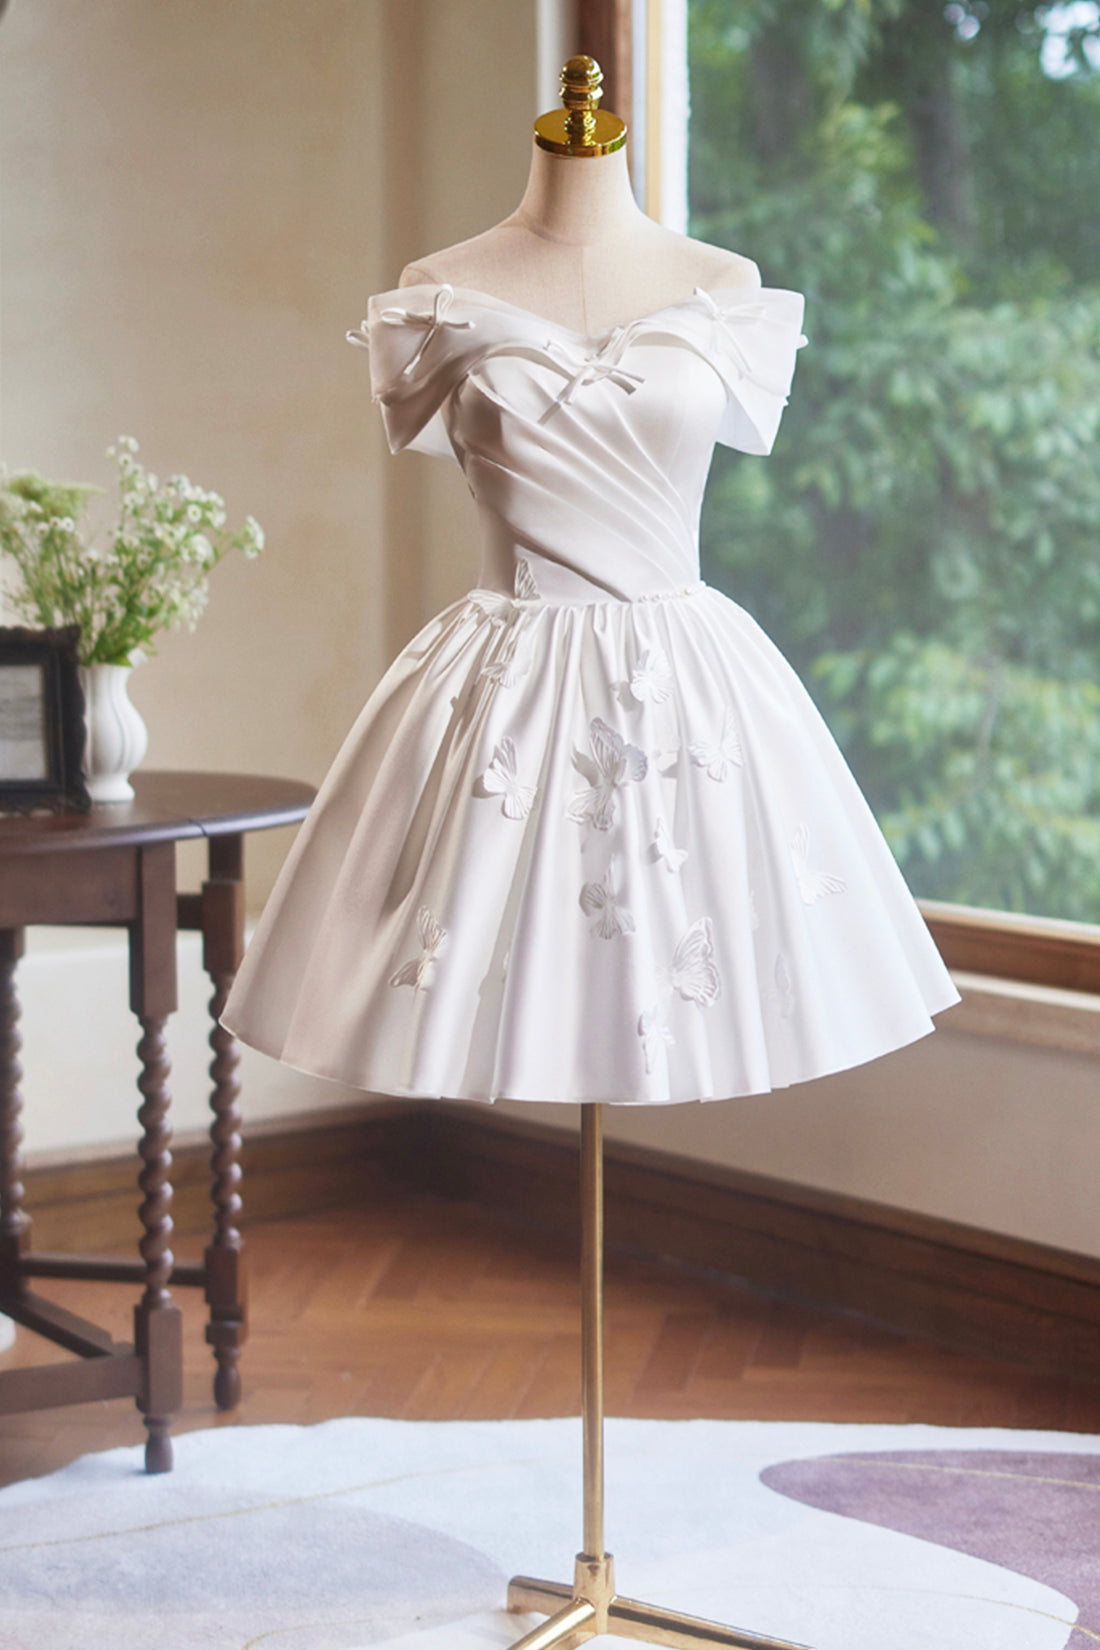 White Satin Knee Length Party Dress, Off the Shoulder A-Line Evening Dress